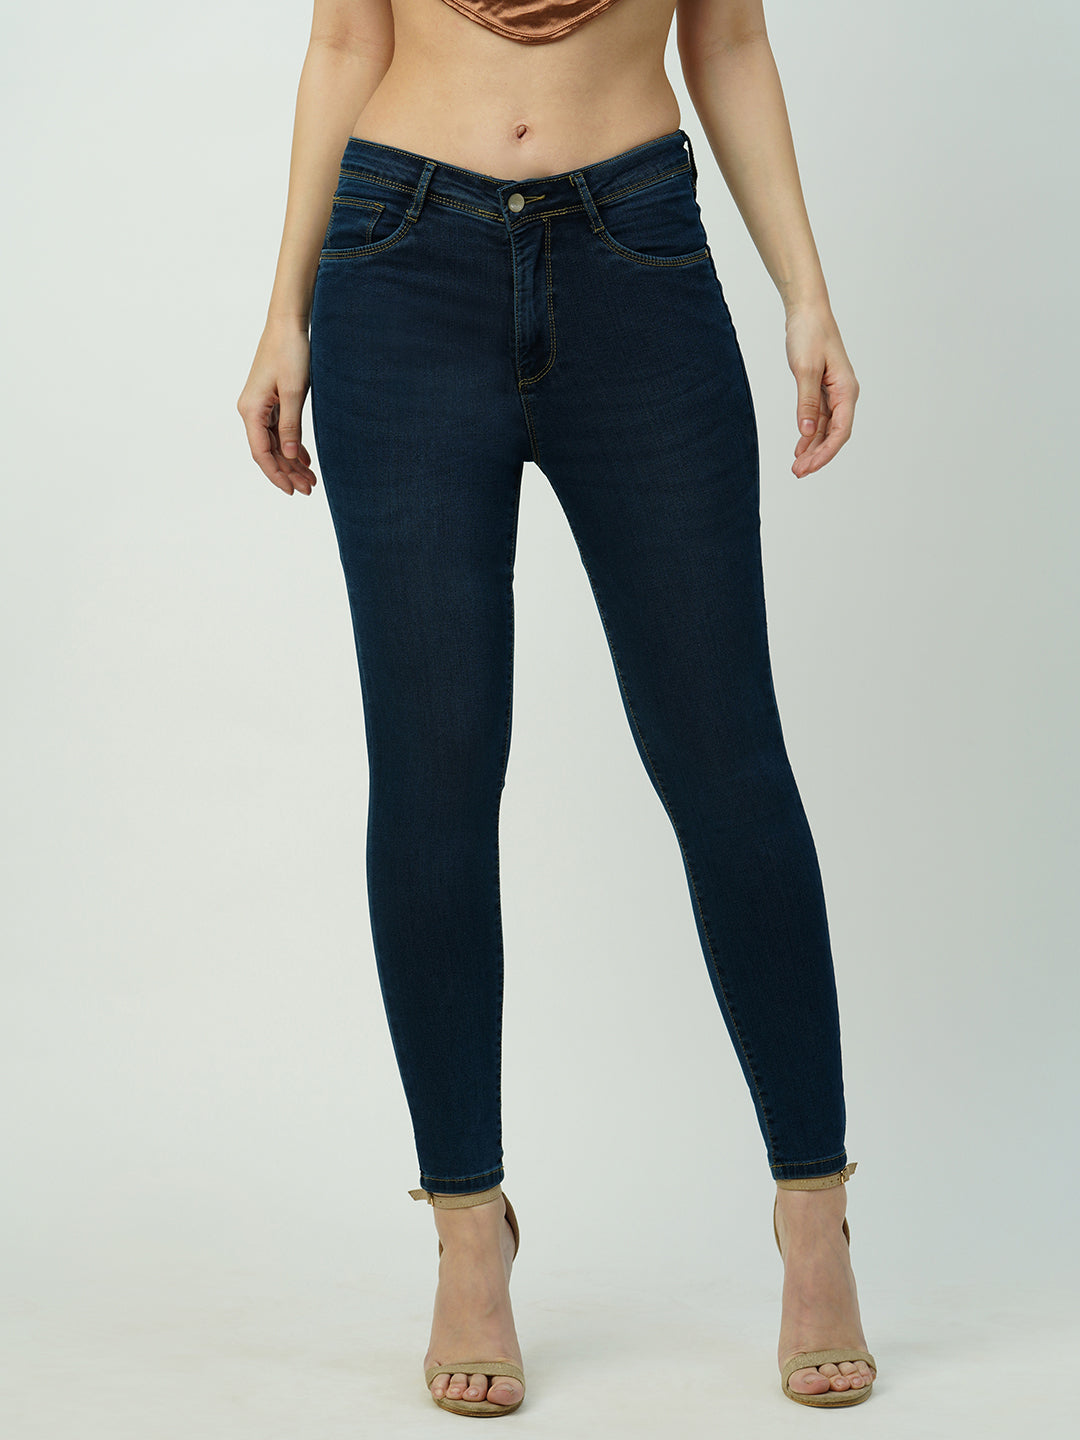 Black Wonderfit Slim Leg Jeans, Women